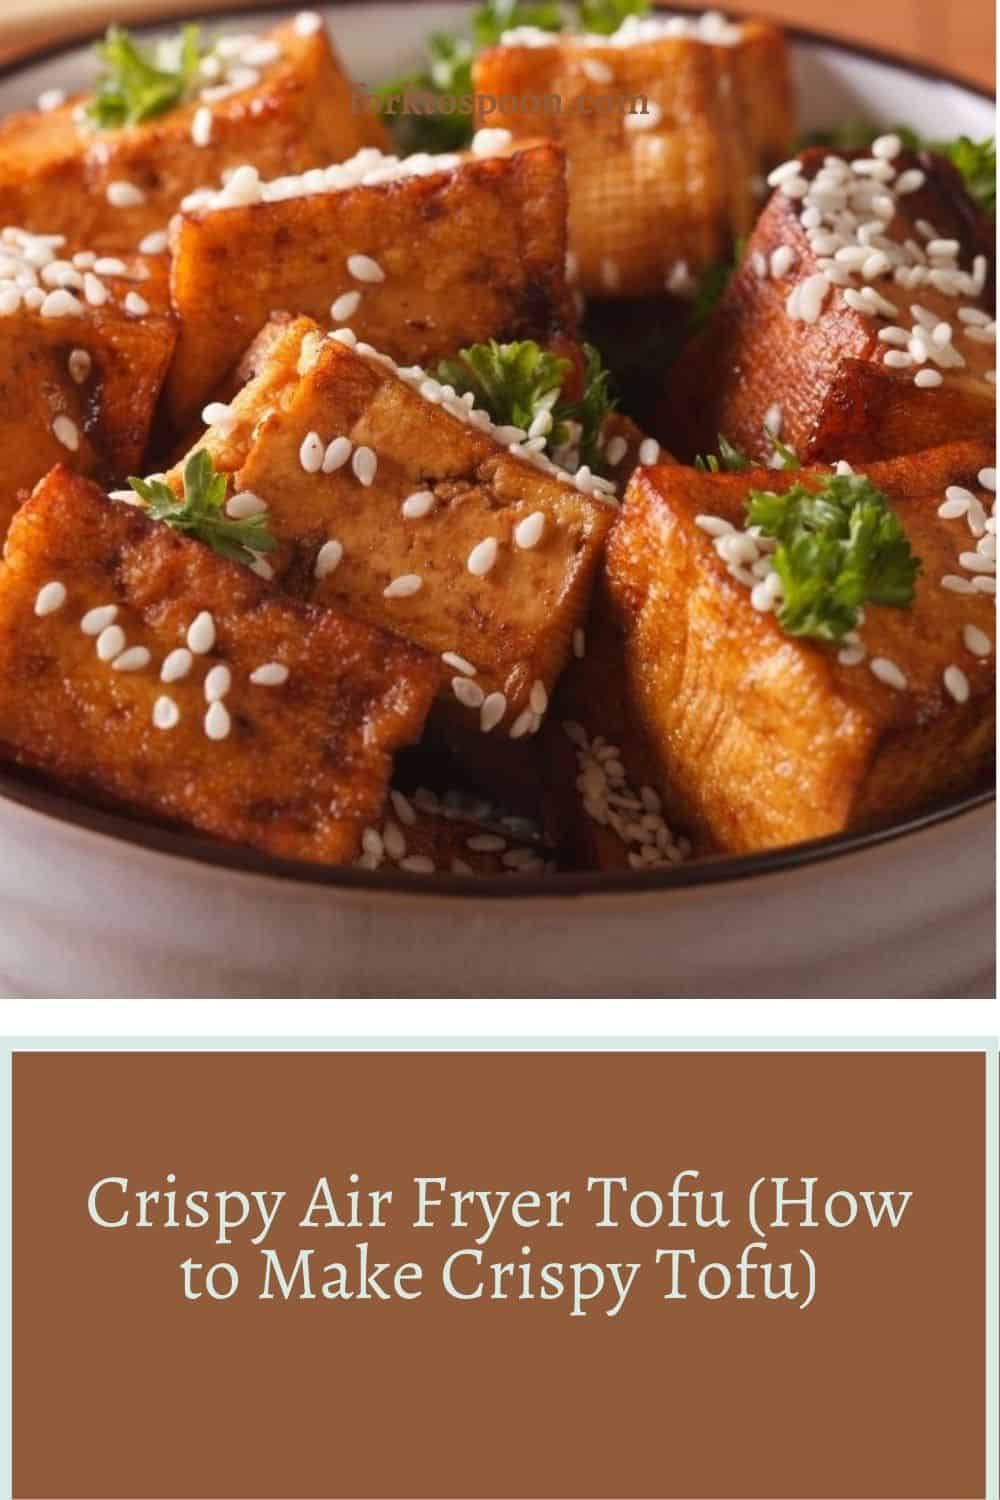 Crispy Air Fryer Tofu (How to Make Crispy Tofu)